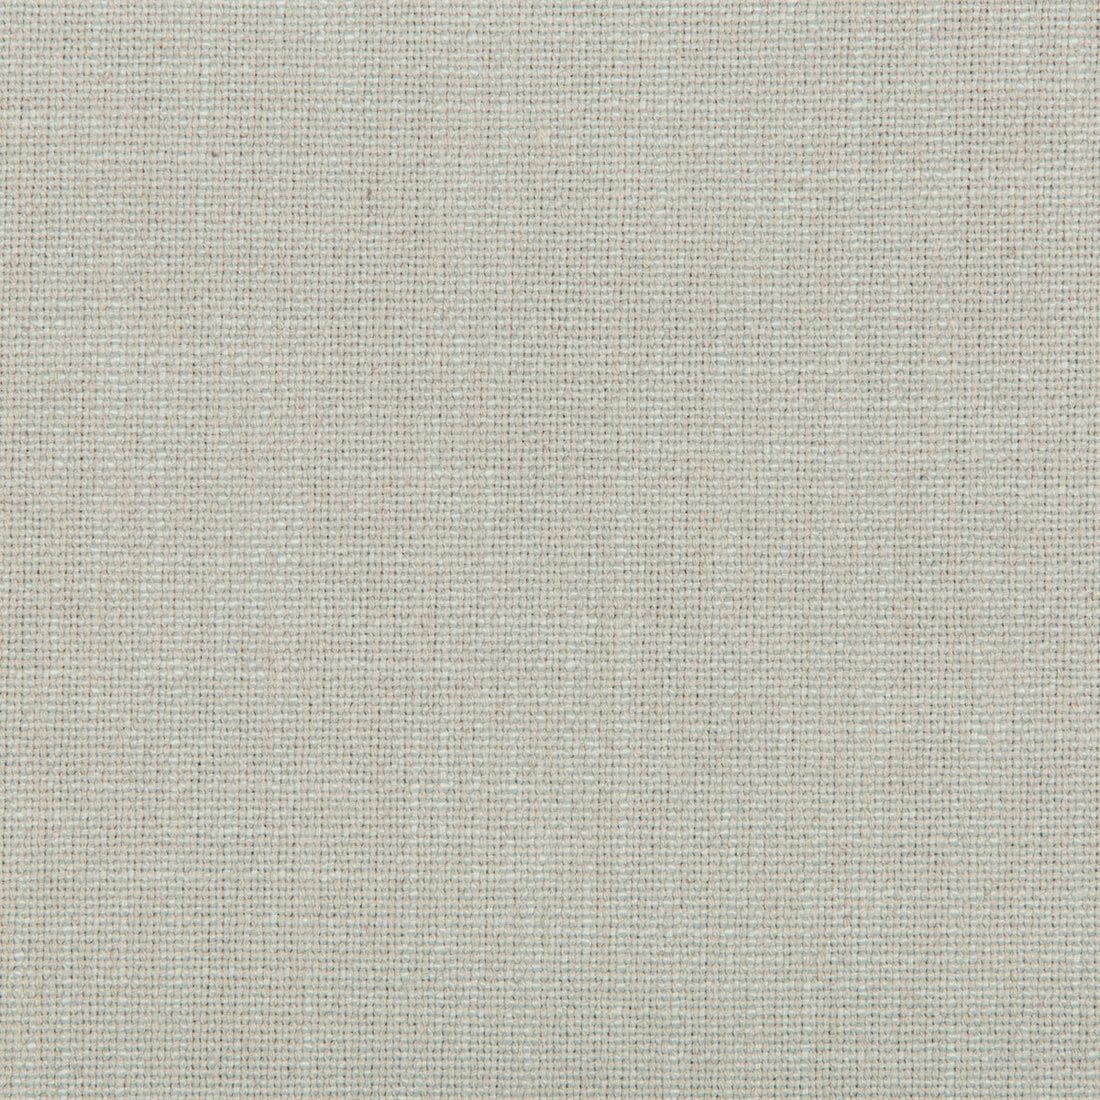 Kravet Smart fabric in 35226-1116 color - pattern 35226.1116.0 - by Kravet Smart in the Performance Kravetarmor collection